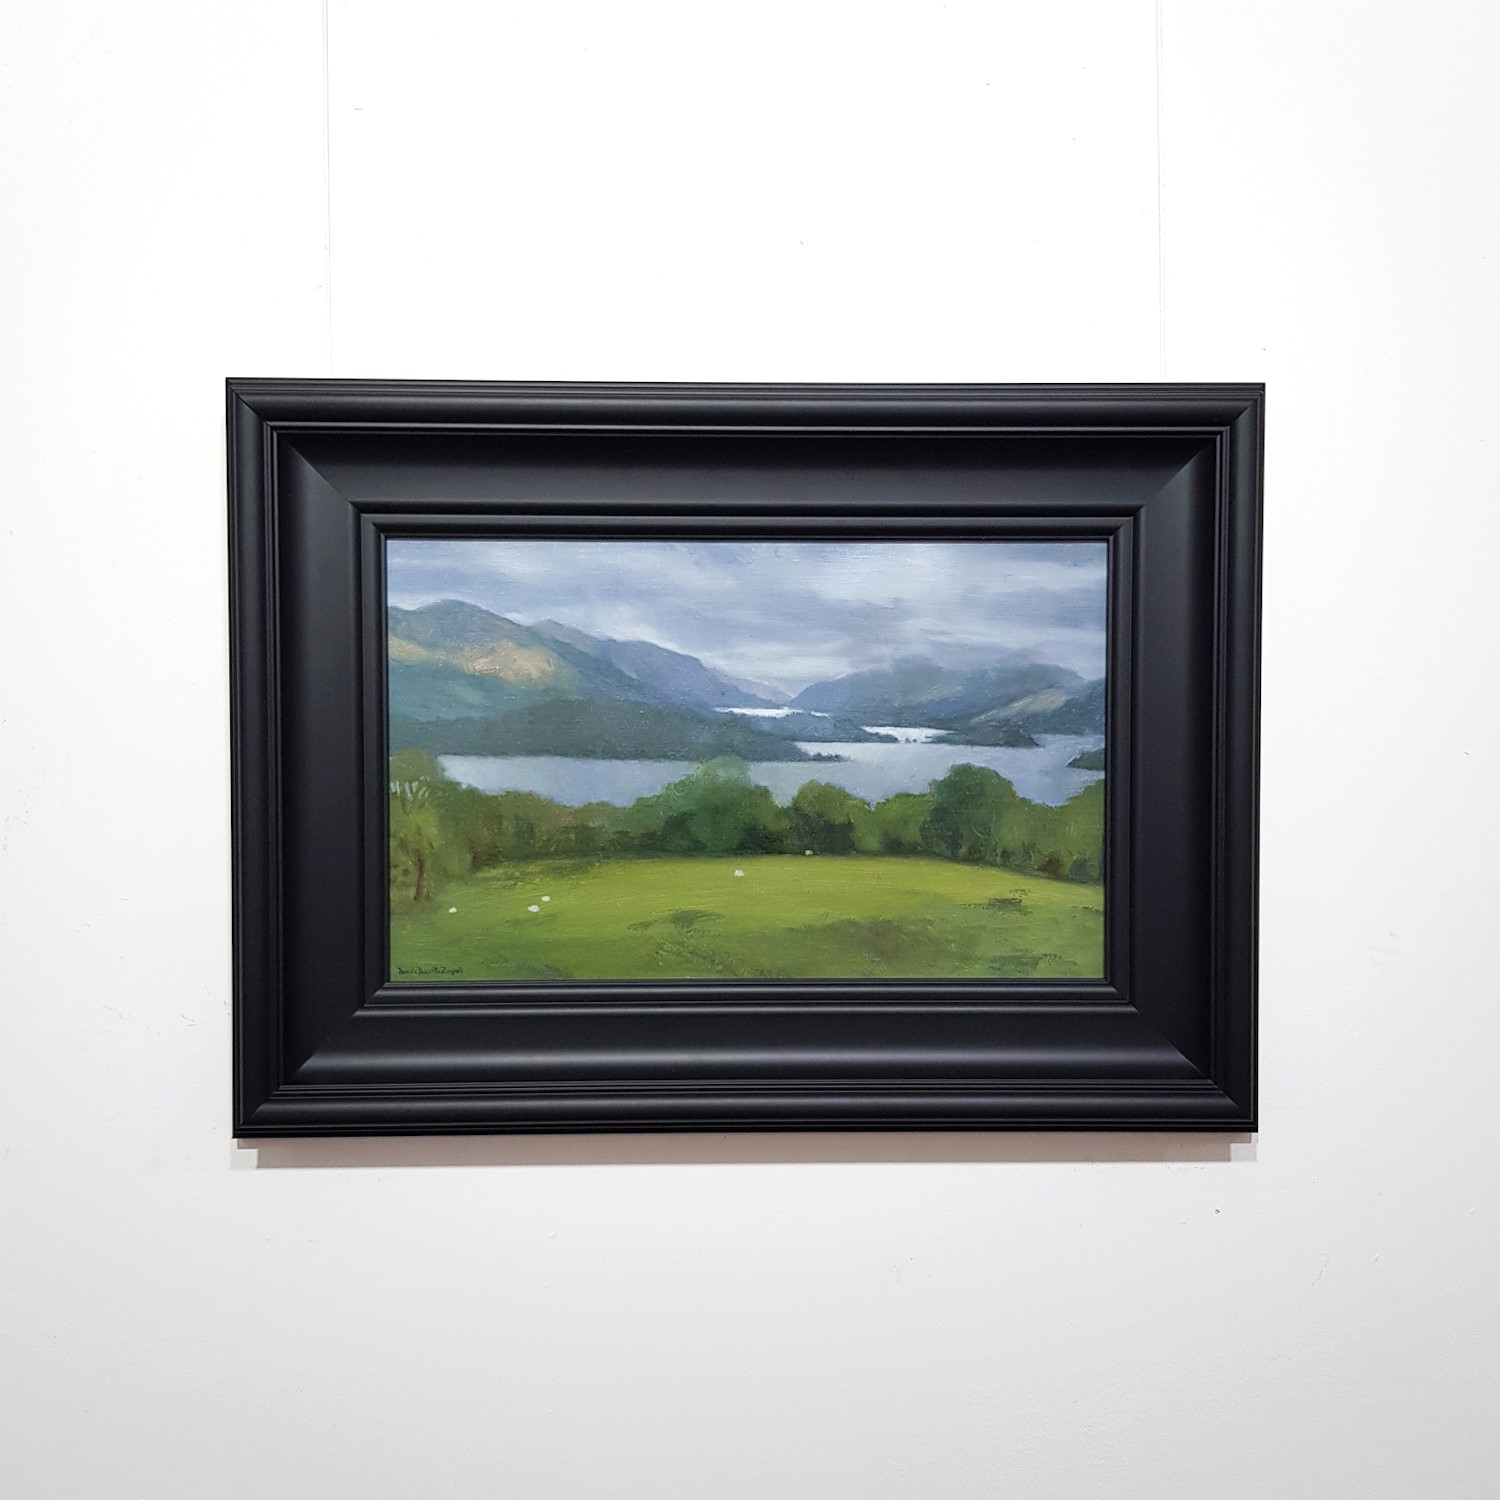 'Misty Day at Loch Lomond' by artist Davide Bozzetti Zirpoli